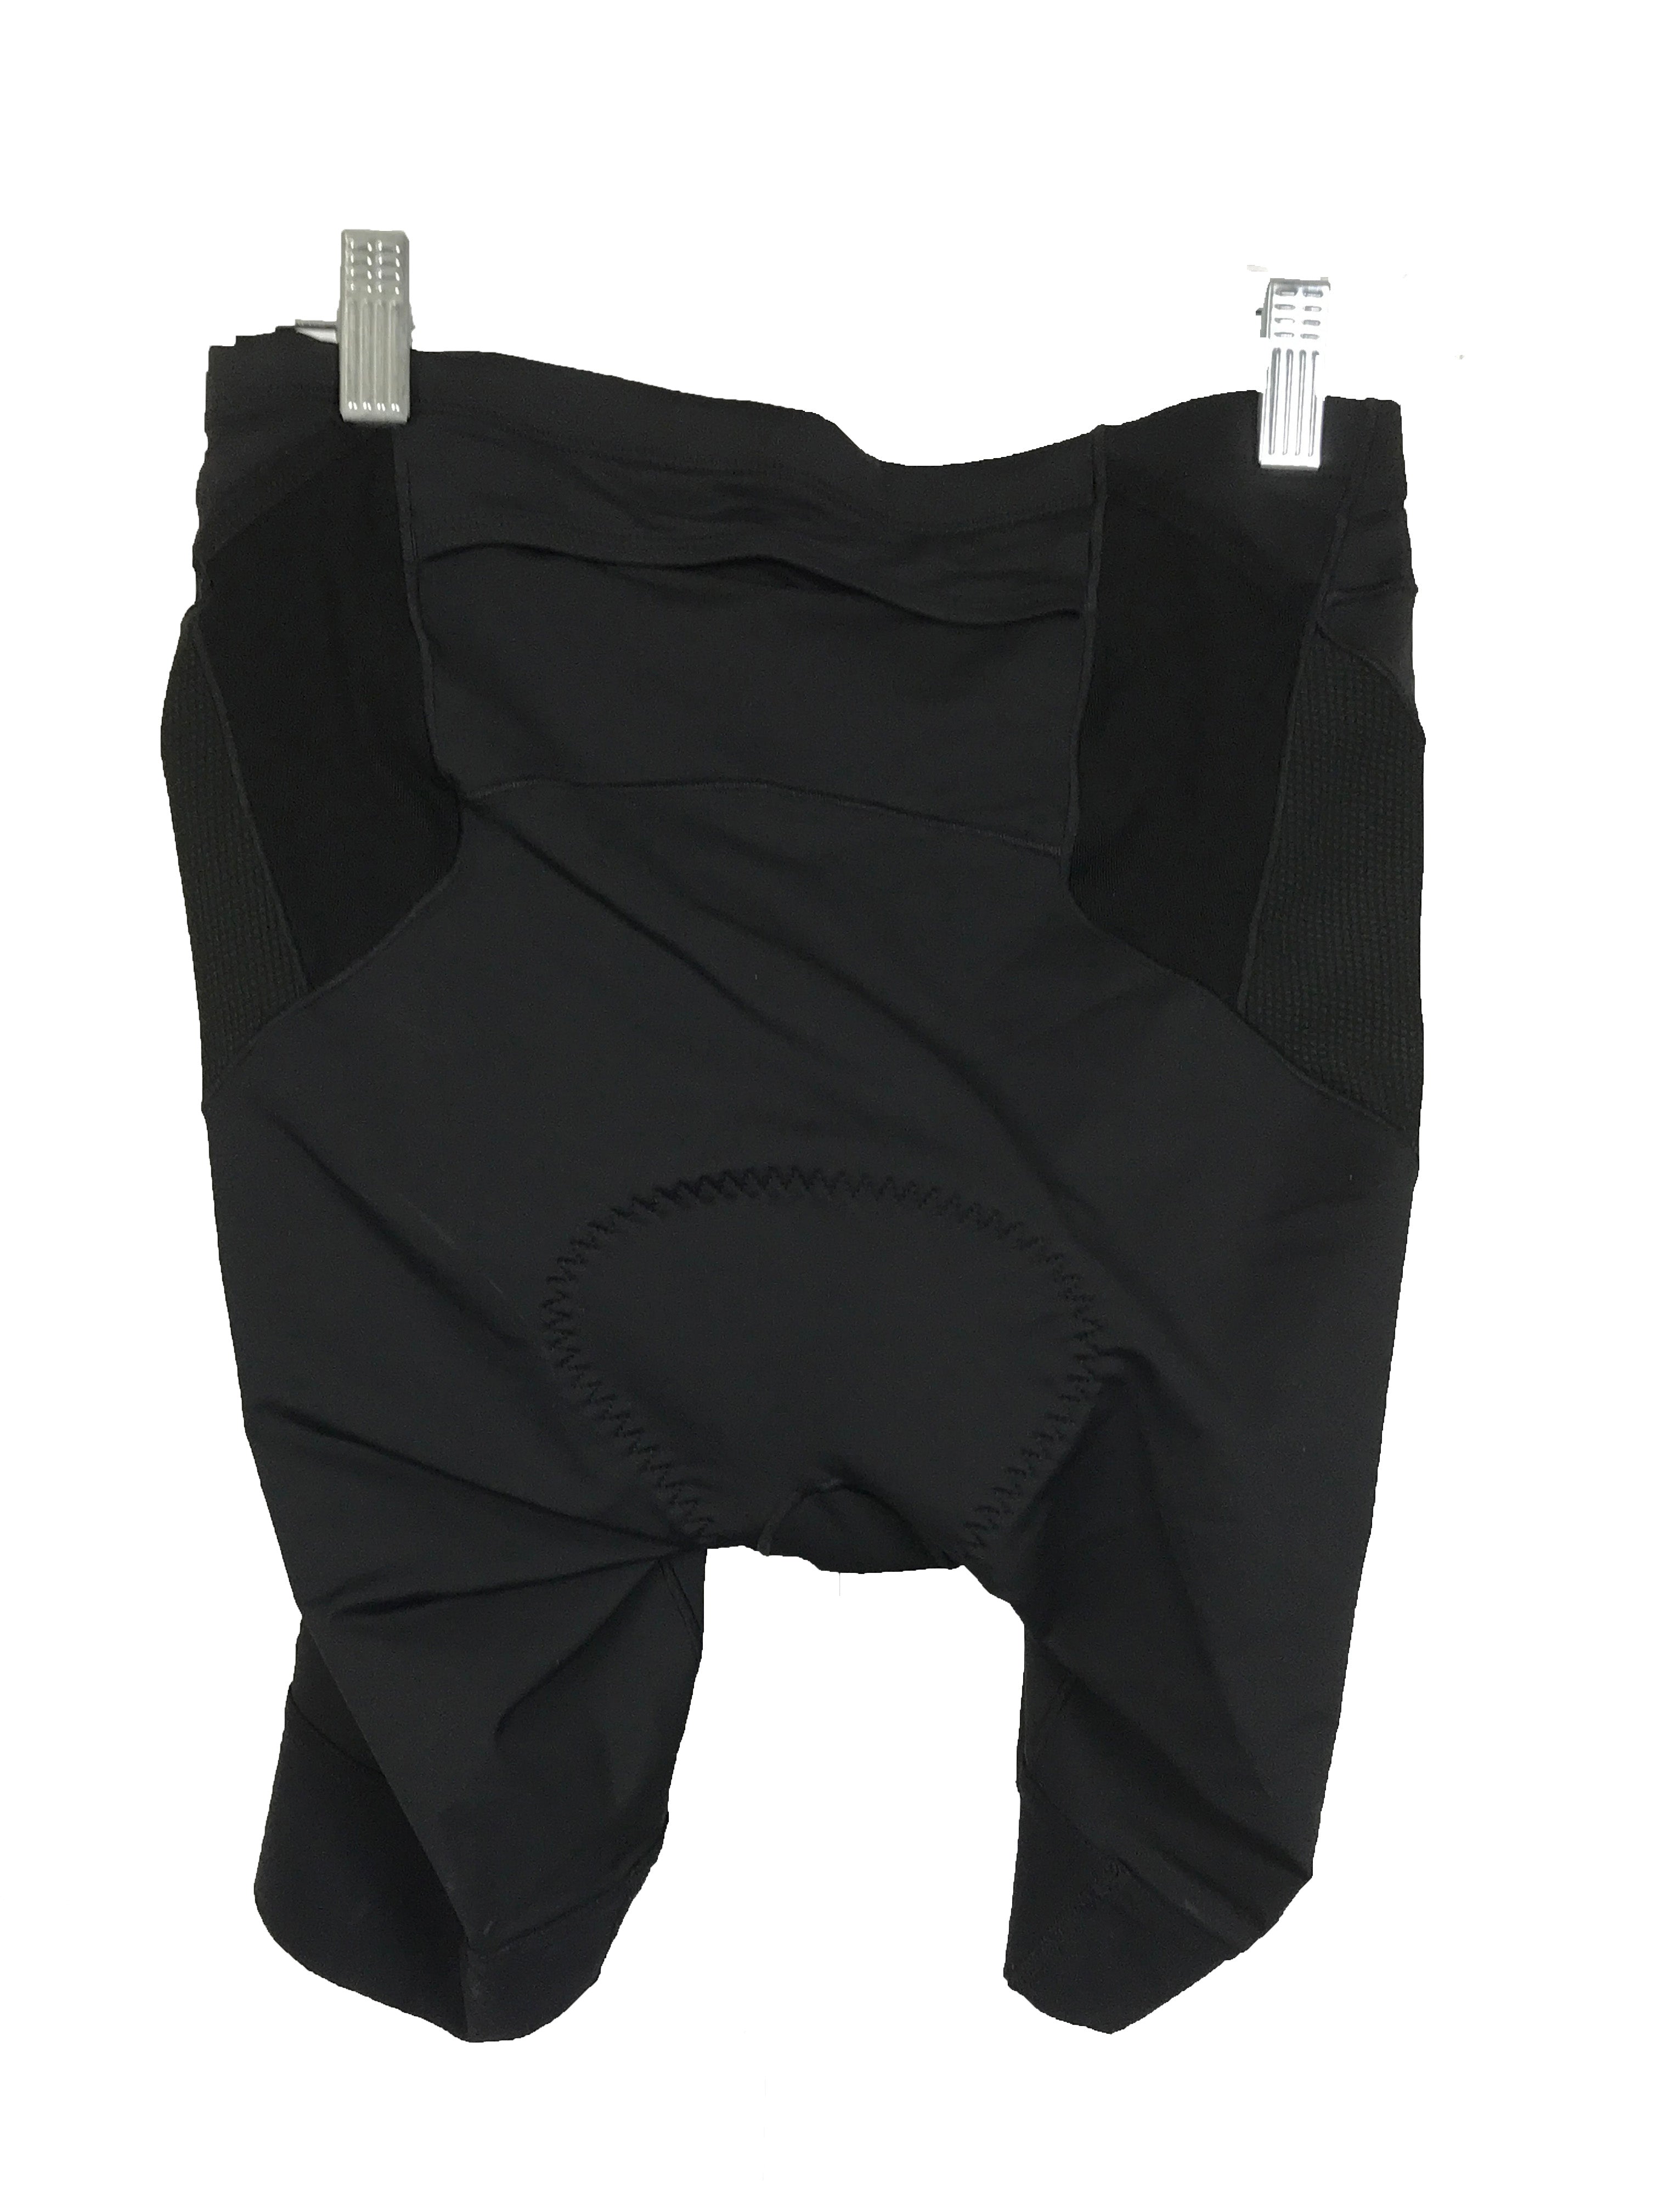 Pearl Izumi Elite Tri Black Shorts Men's L NWT